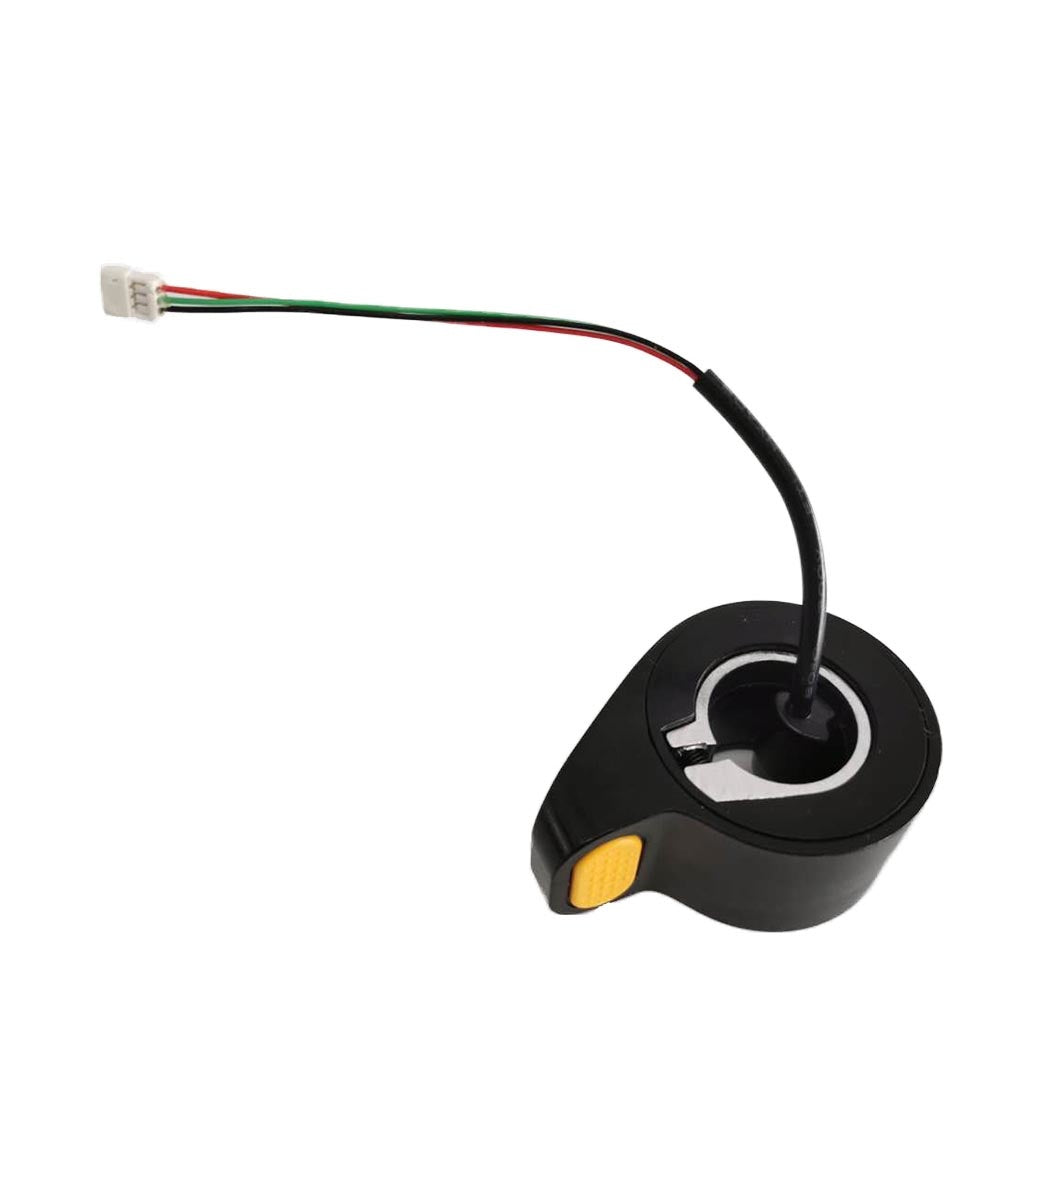 Cable d'alimentation pour trotinette electrique Ninebot Segway G30 – France  Gyrotrot